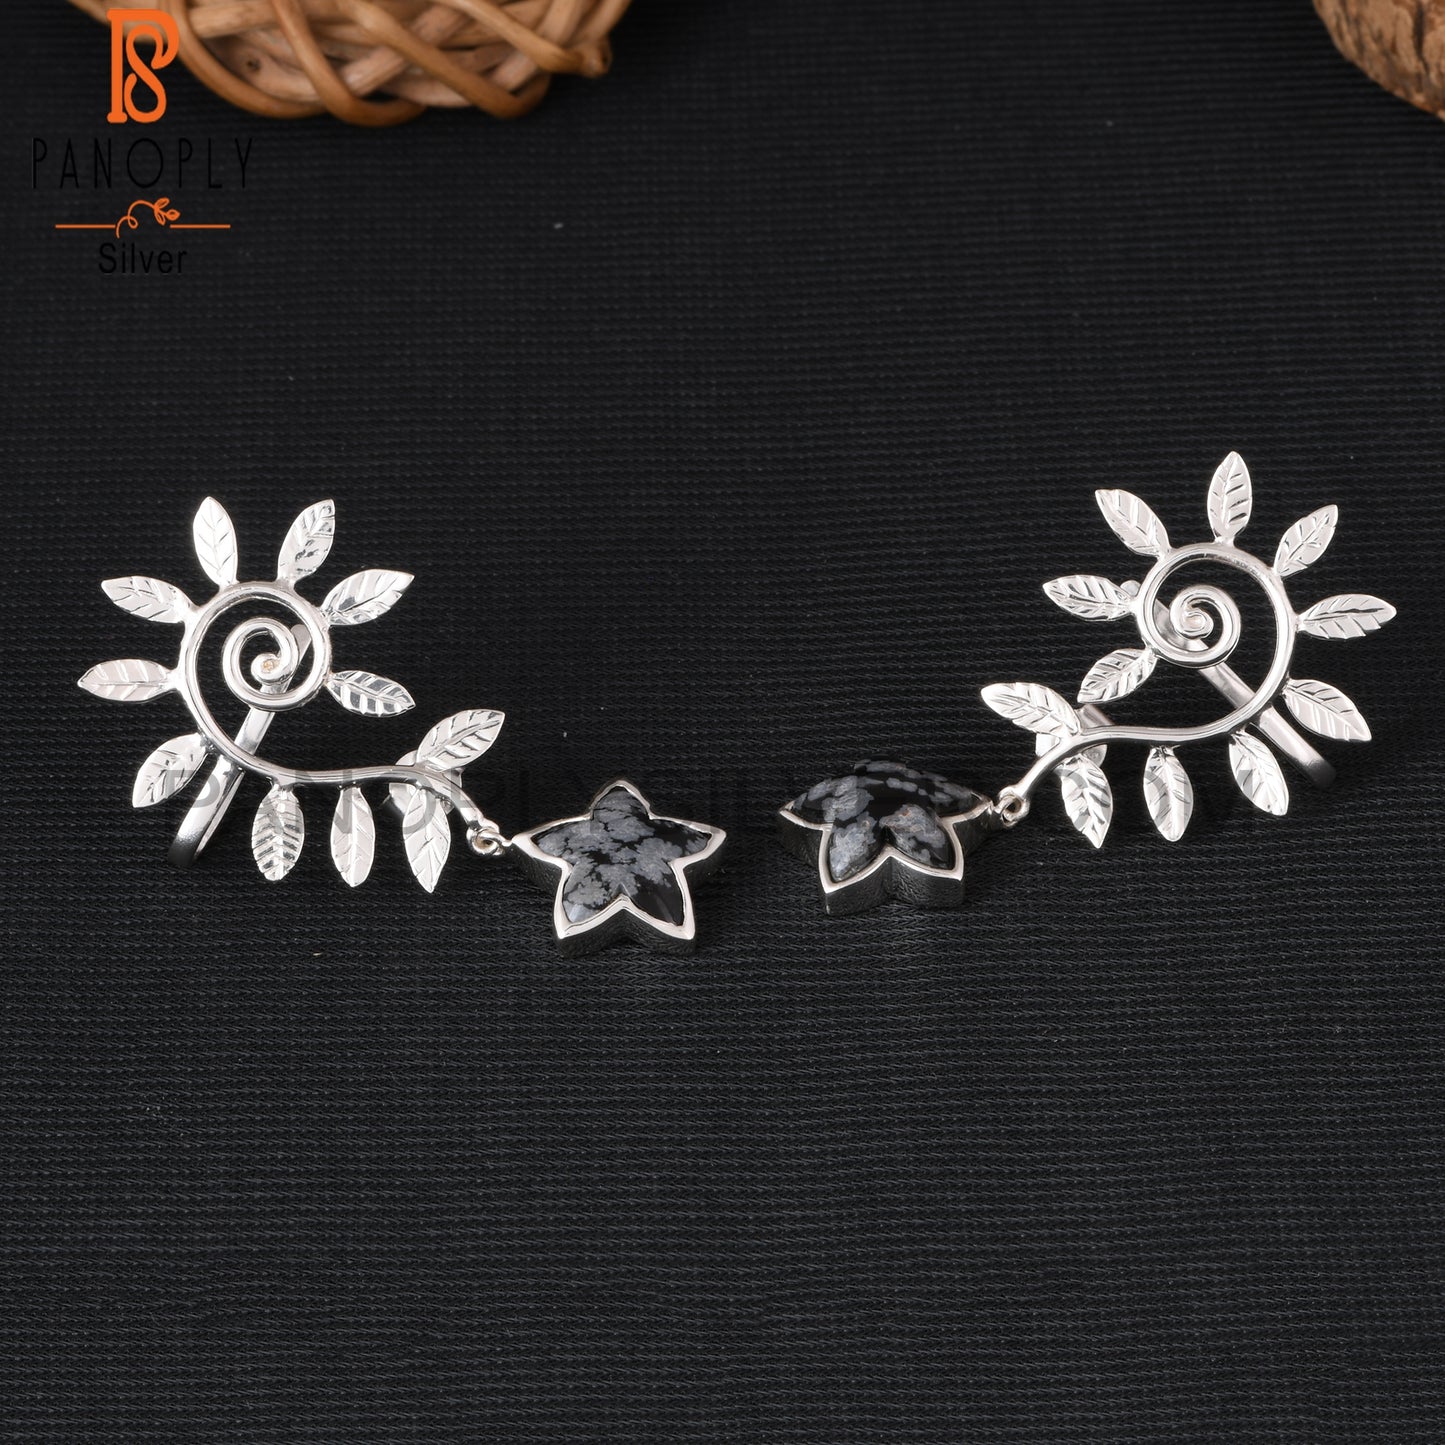 Snowflake Obsidian Moonflower 925 Silver Leaf Earrings